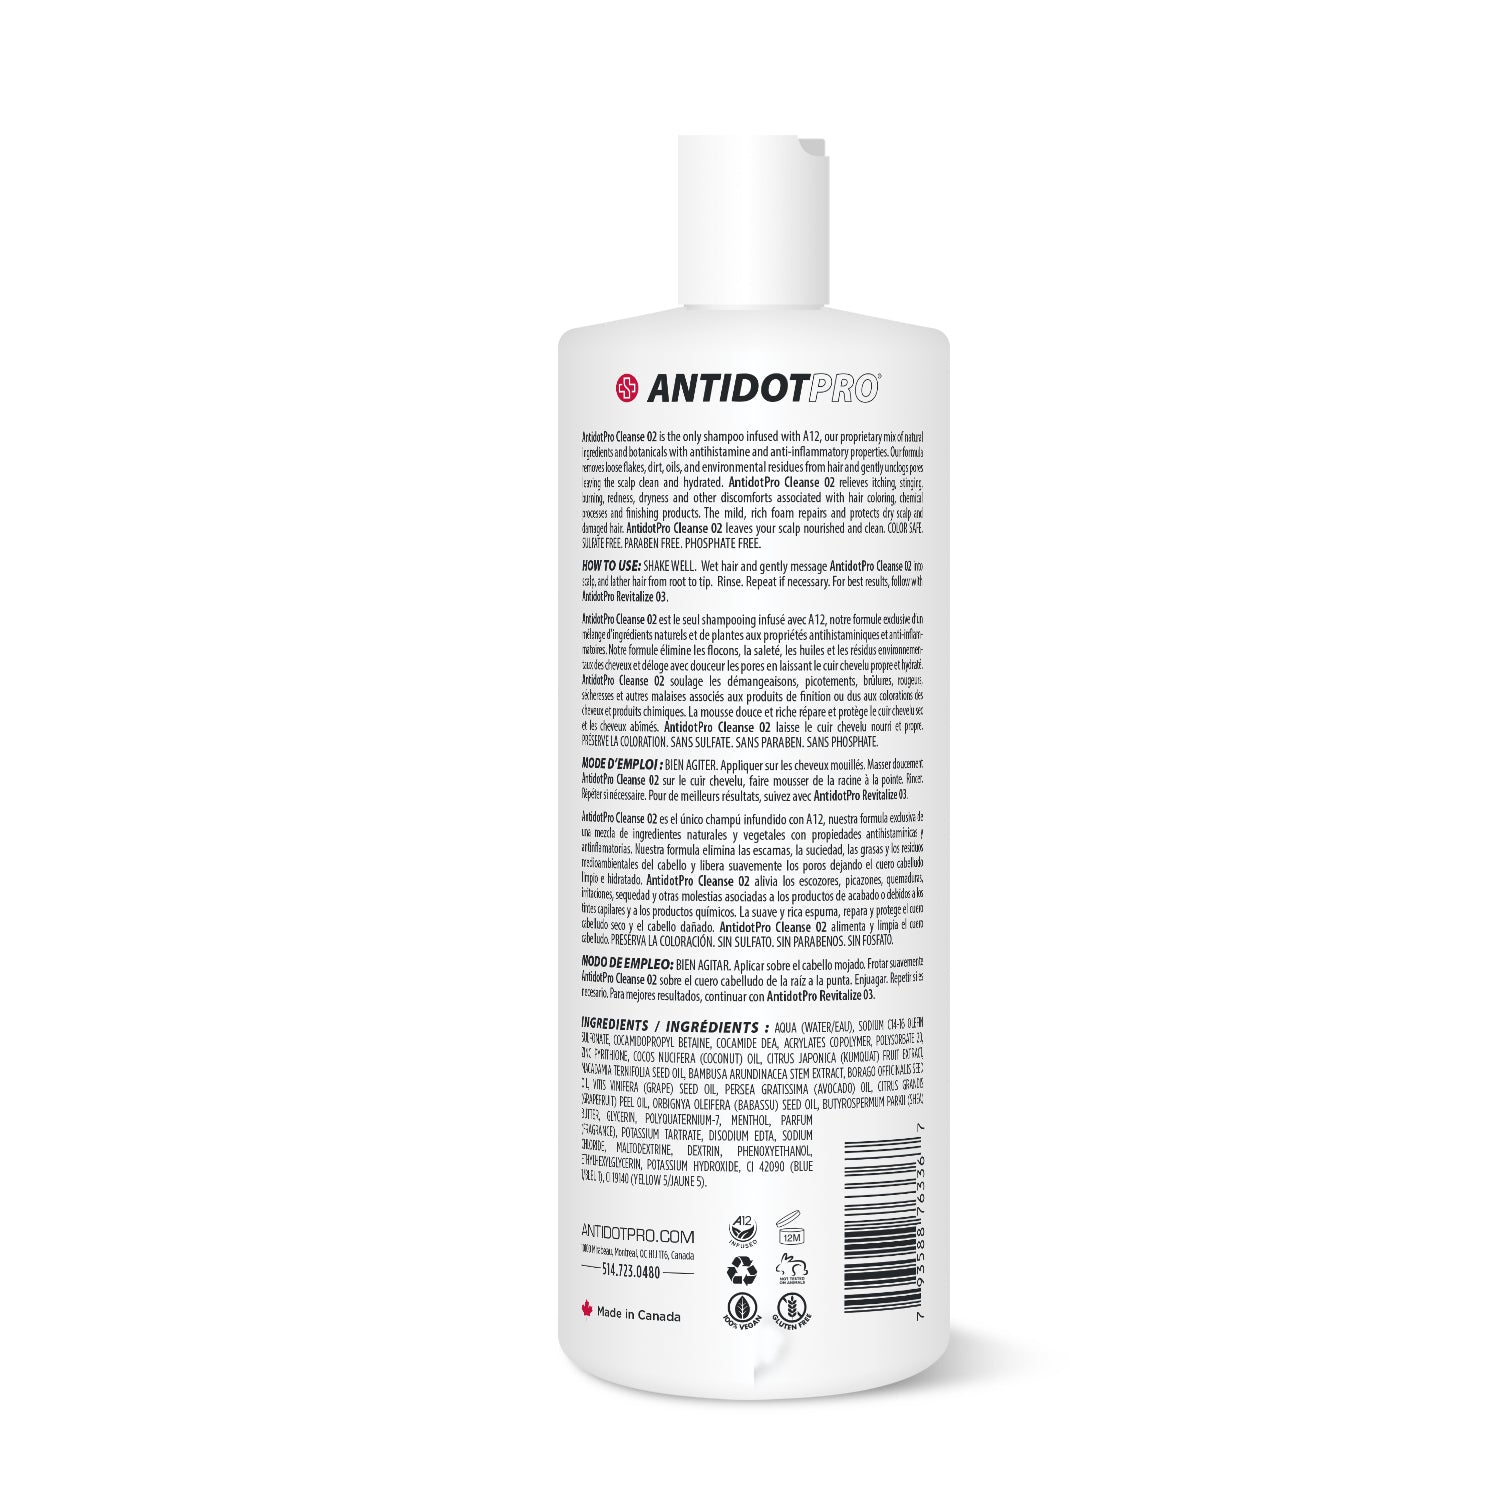 AntidotPro 02 Cleanse - 1000ML [ANTI-R-02-1000]